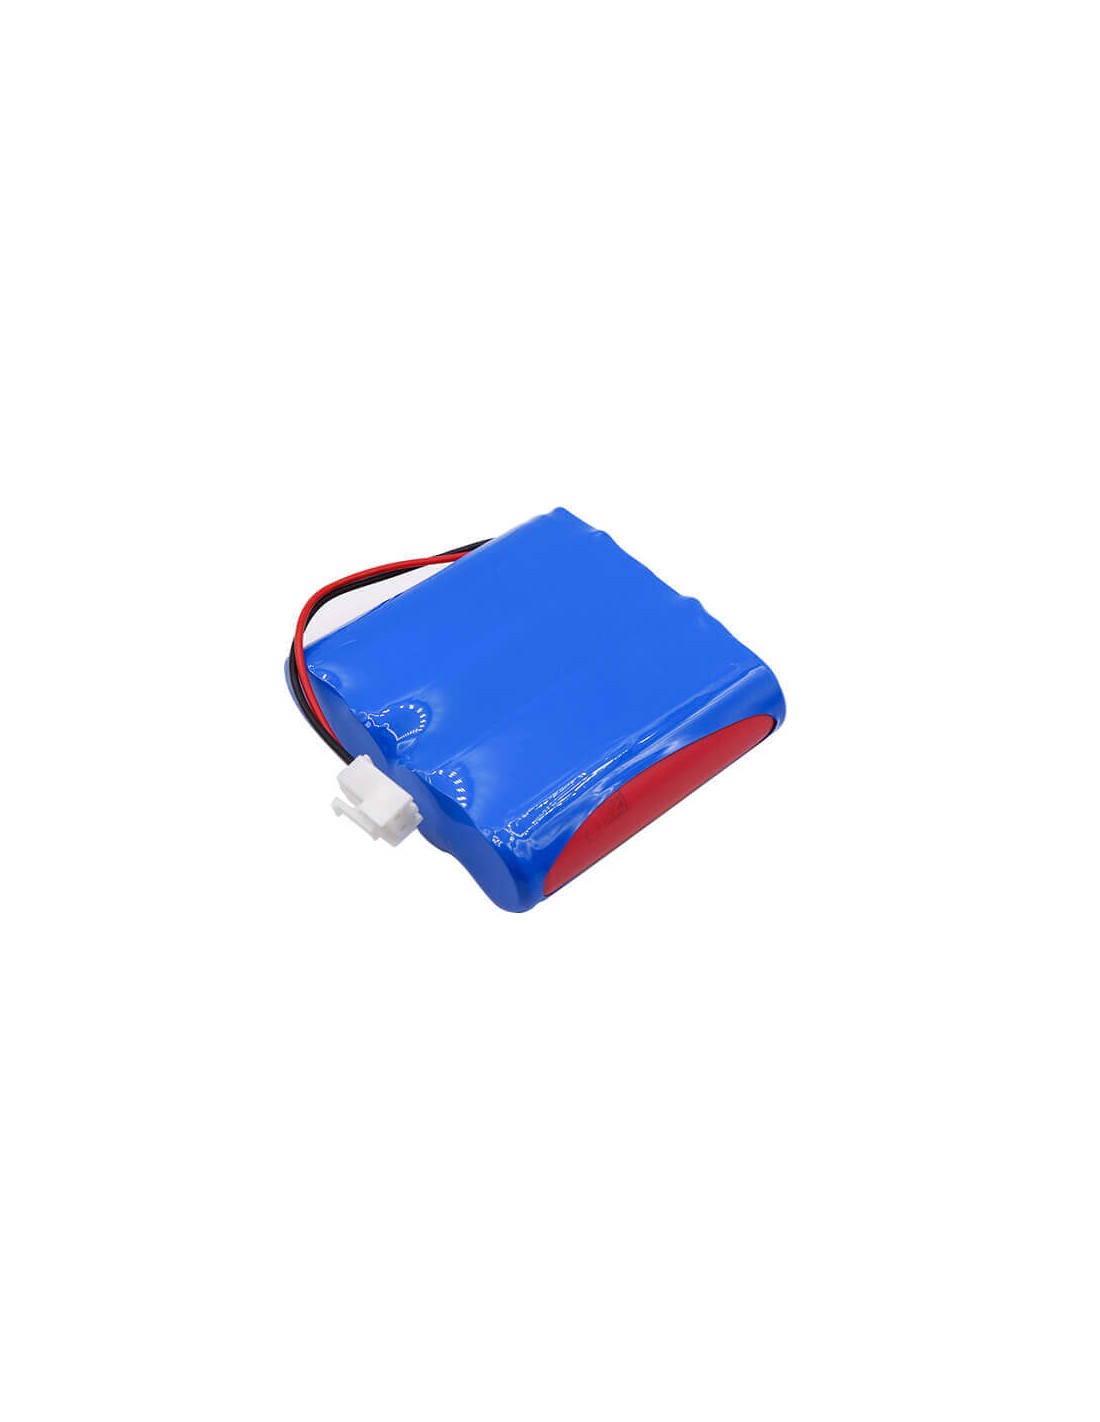 Battery for Biocare, Ecg-3010, Ecg-3010 Digital 3-channel Ecg 14.8V, 3400mAh - 50.32Wh